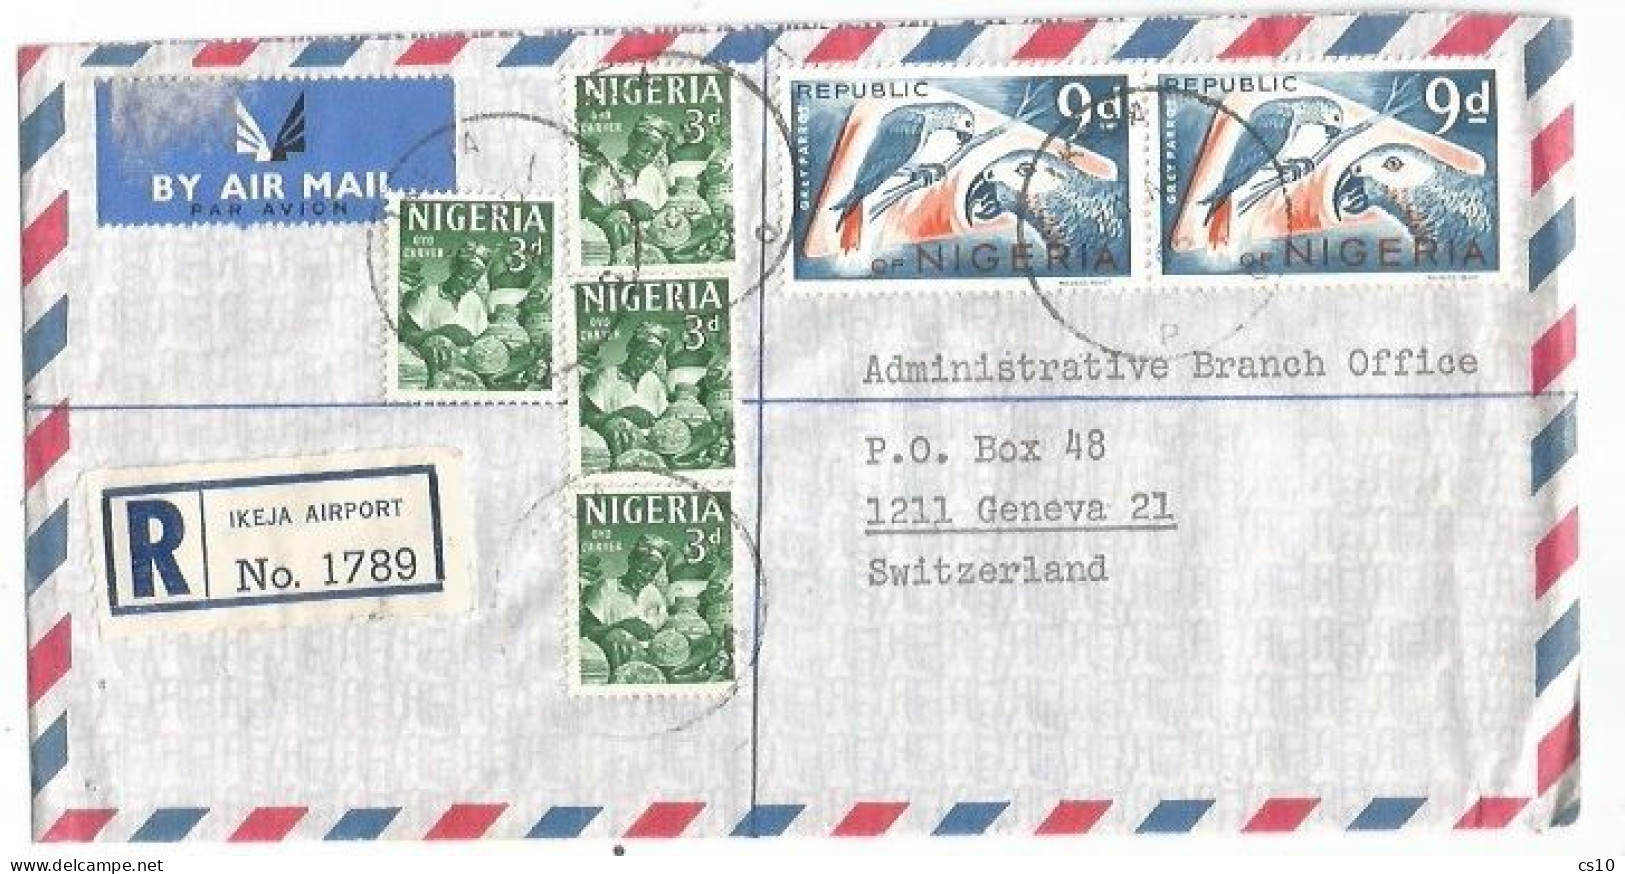 Nigeria Registered AirmailCV Ikeja Airport 30aug1968 With D.9 Pair + D.3 Strip3+1 To Suisse - Nigeria (1961-...)